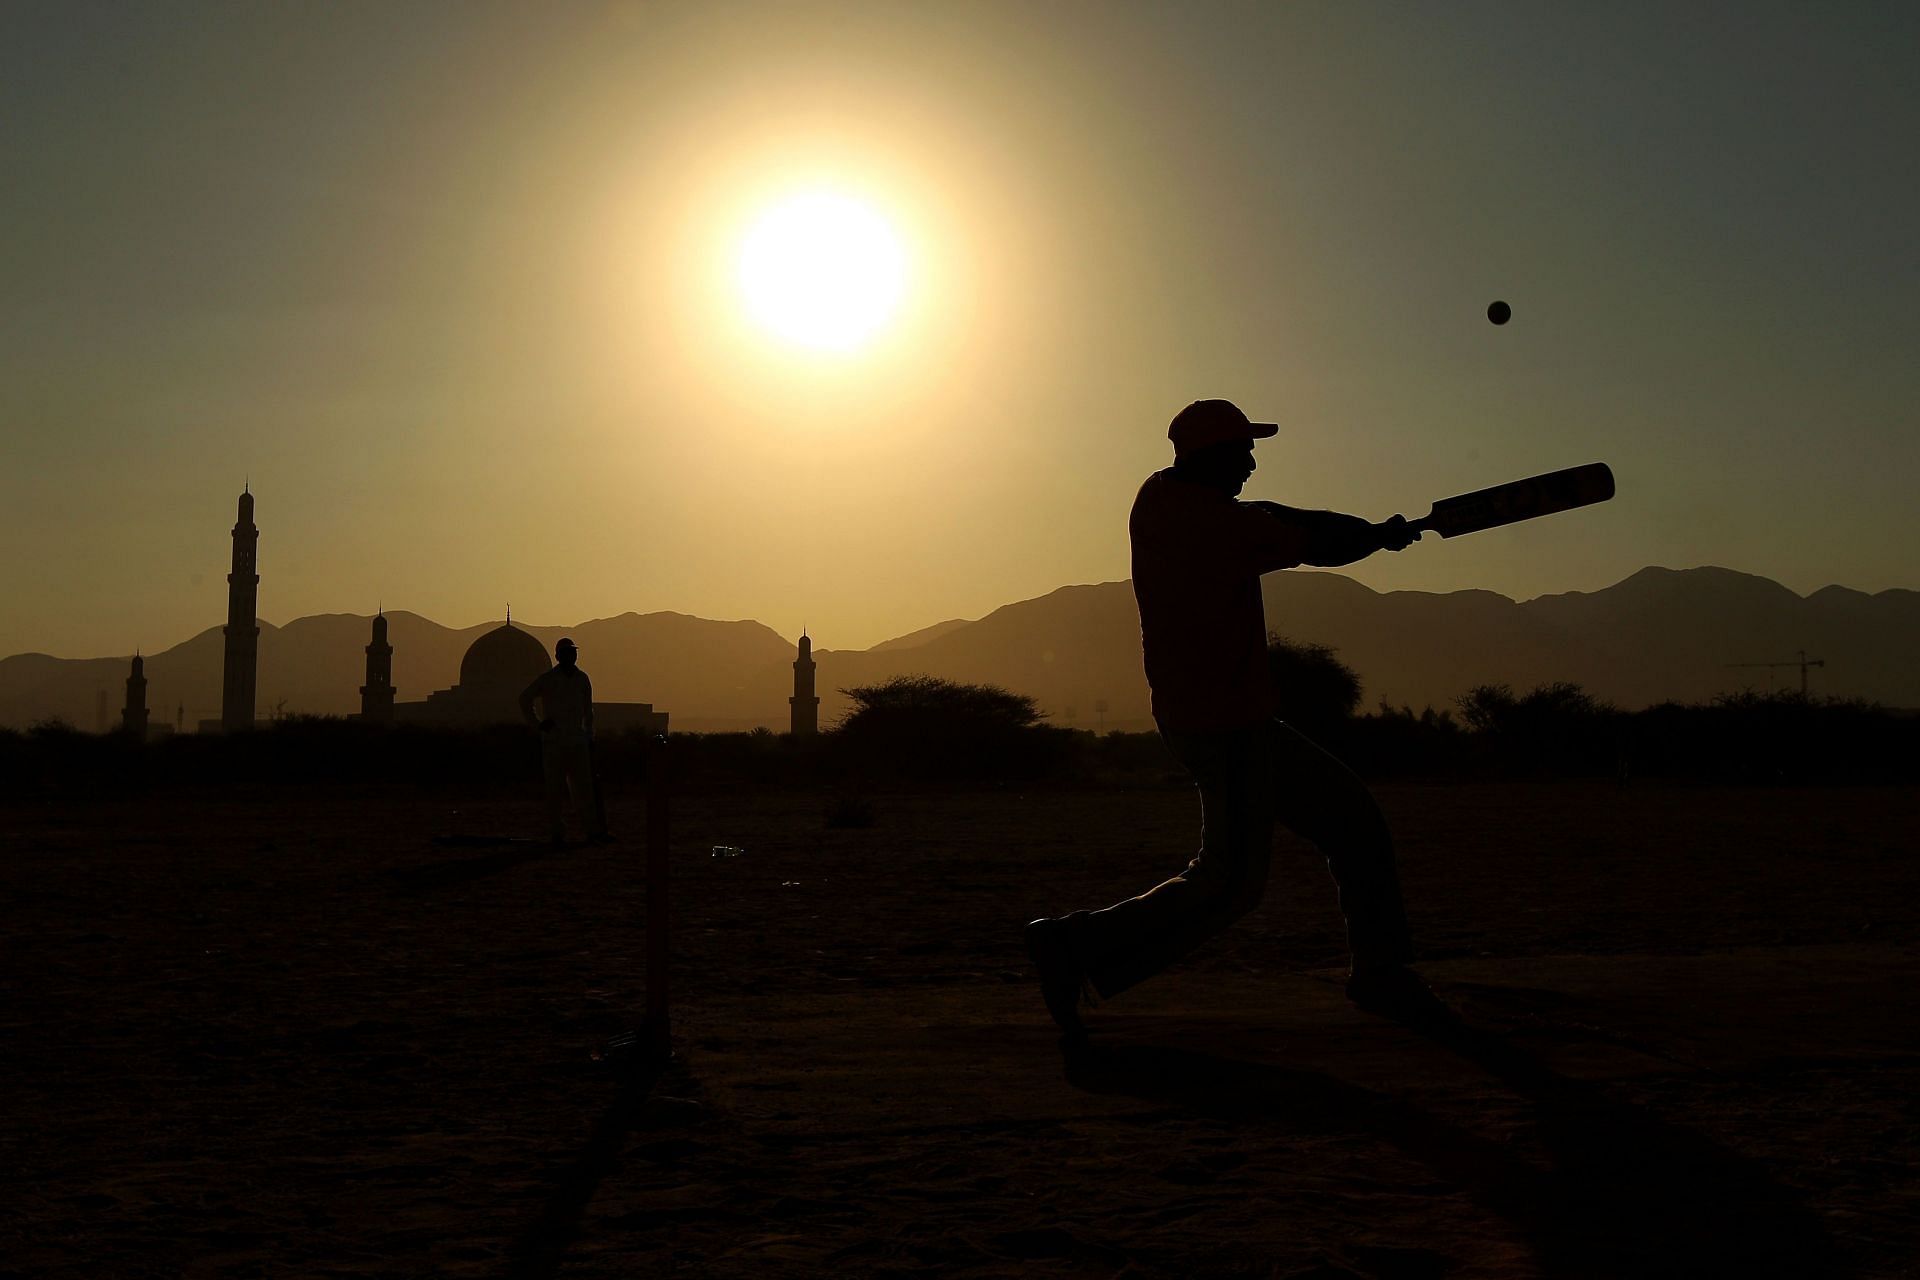 Local Cricket in Muscat in progress